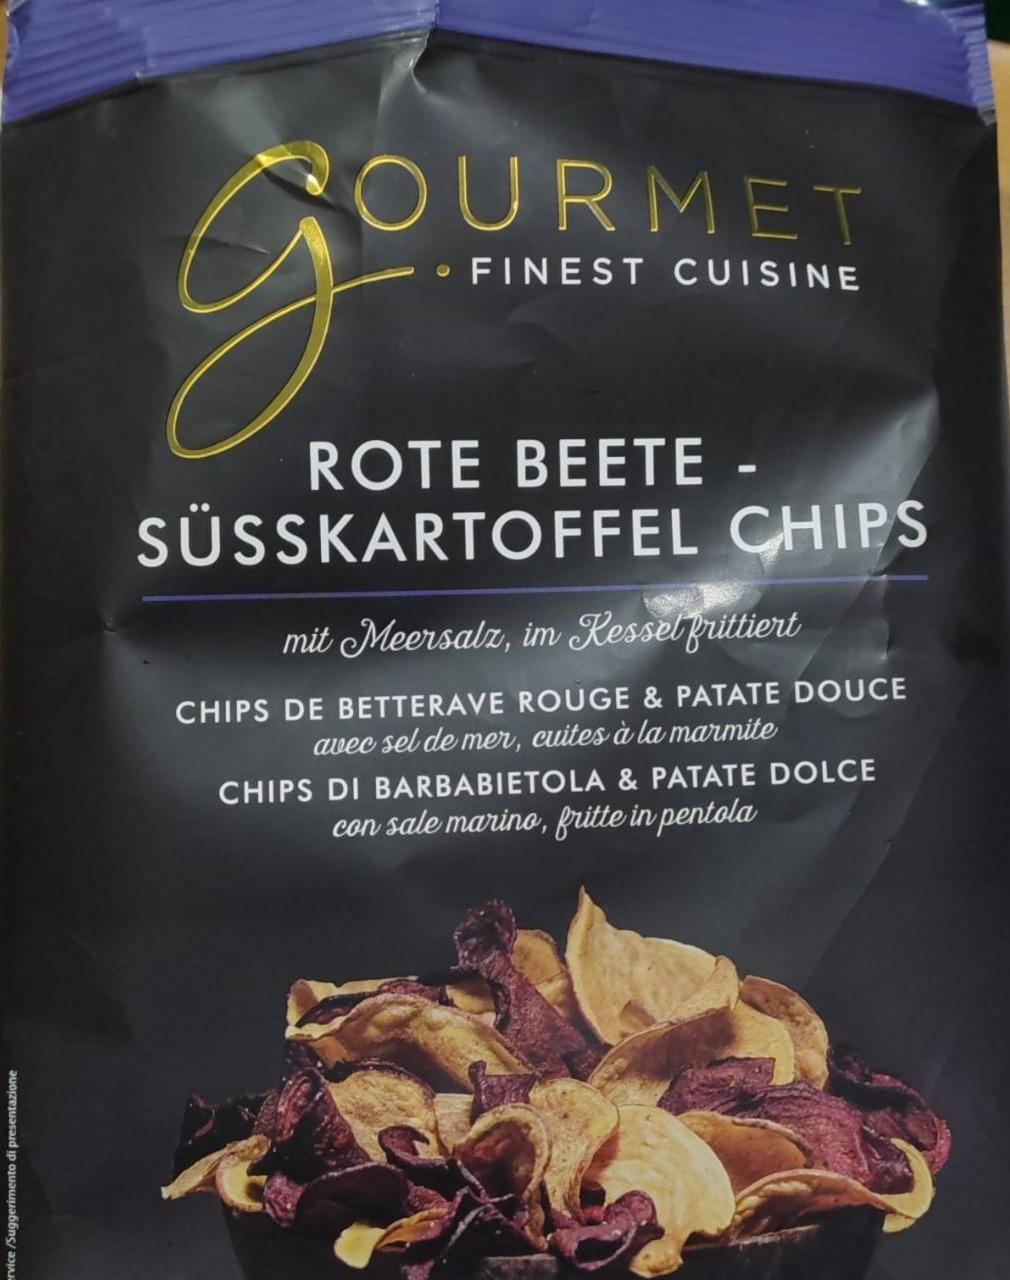 Fotografie - Rote Beete-Süsskartoffel Chips Gourmet finest cuisine